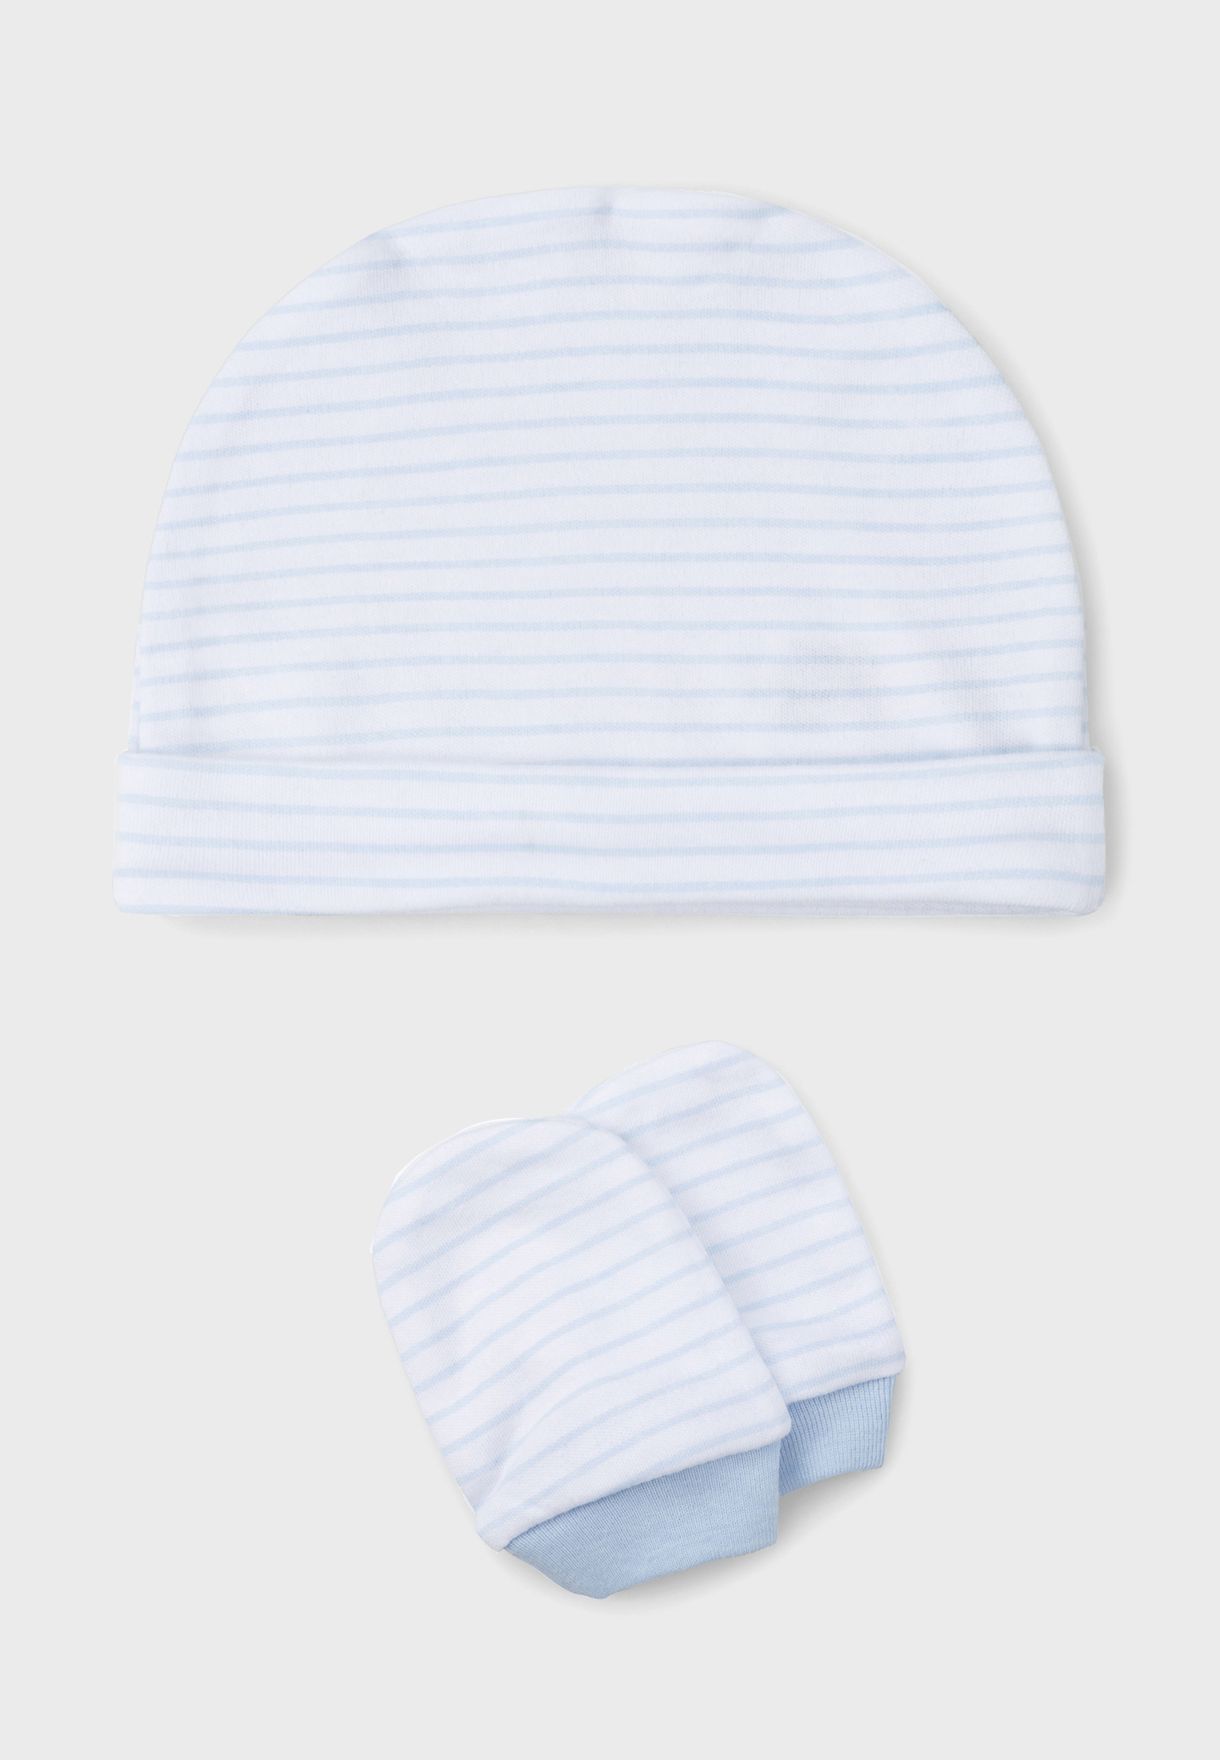 Infant Bunny Velour Sleepsuit + Hat And Bib Set